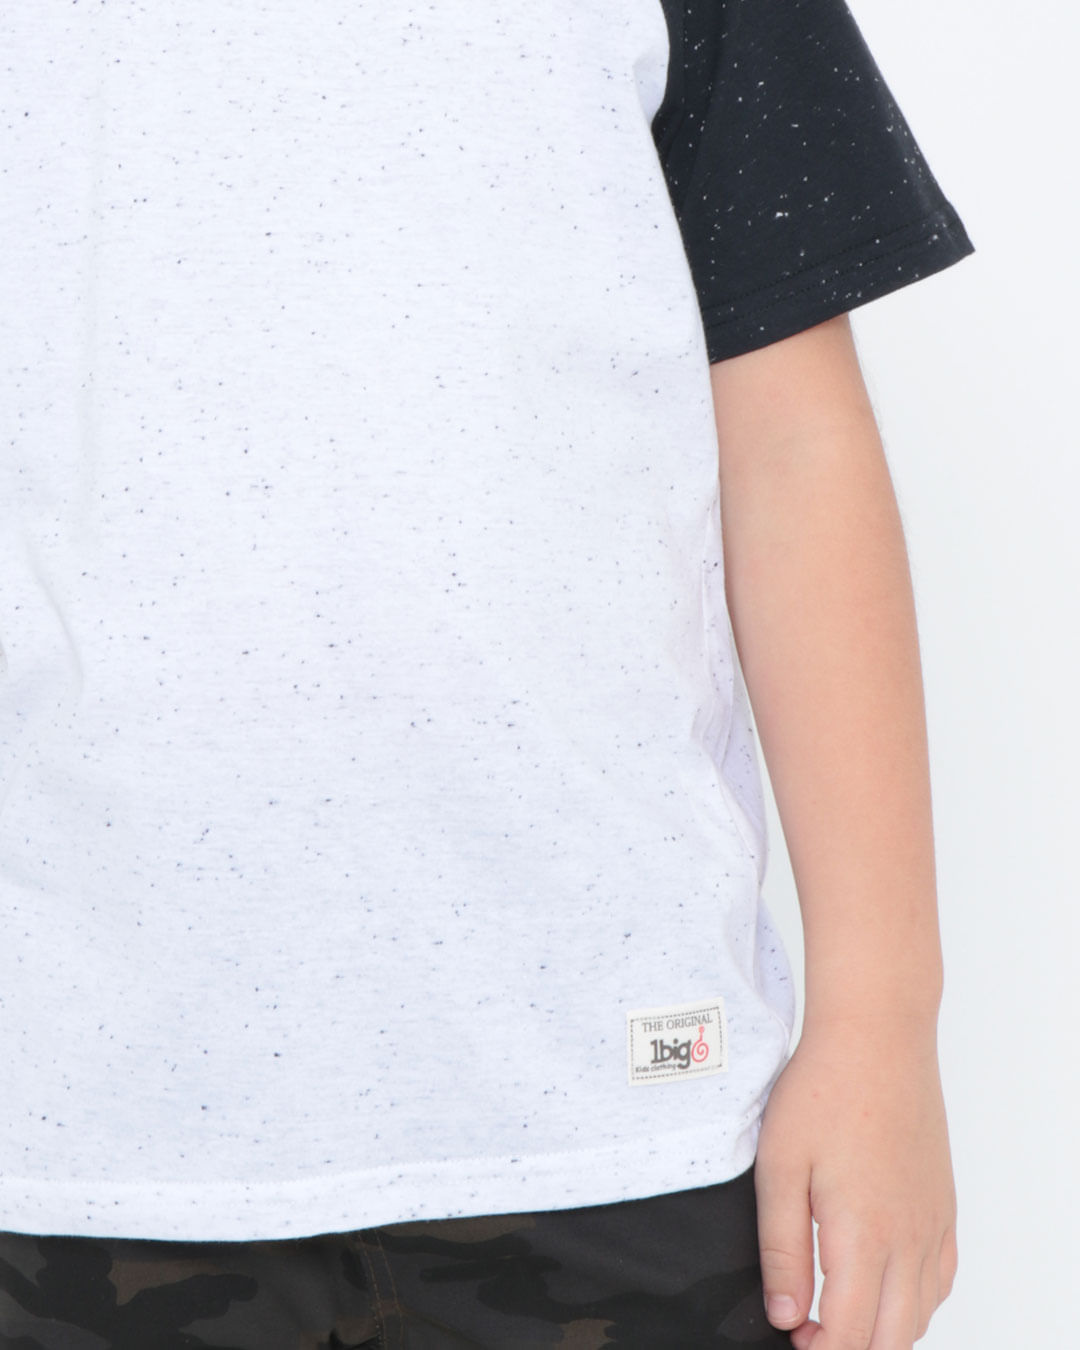 Camiseta-Infantil-Manga-Curta-Botone-Branca